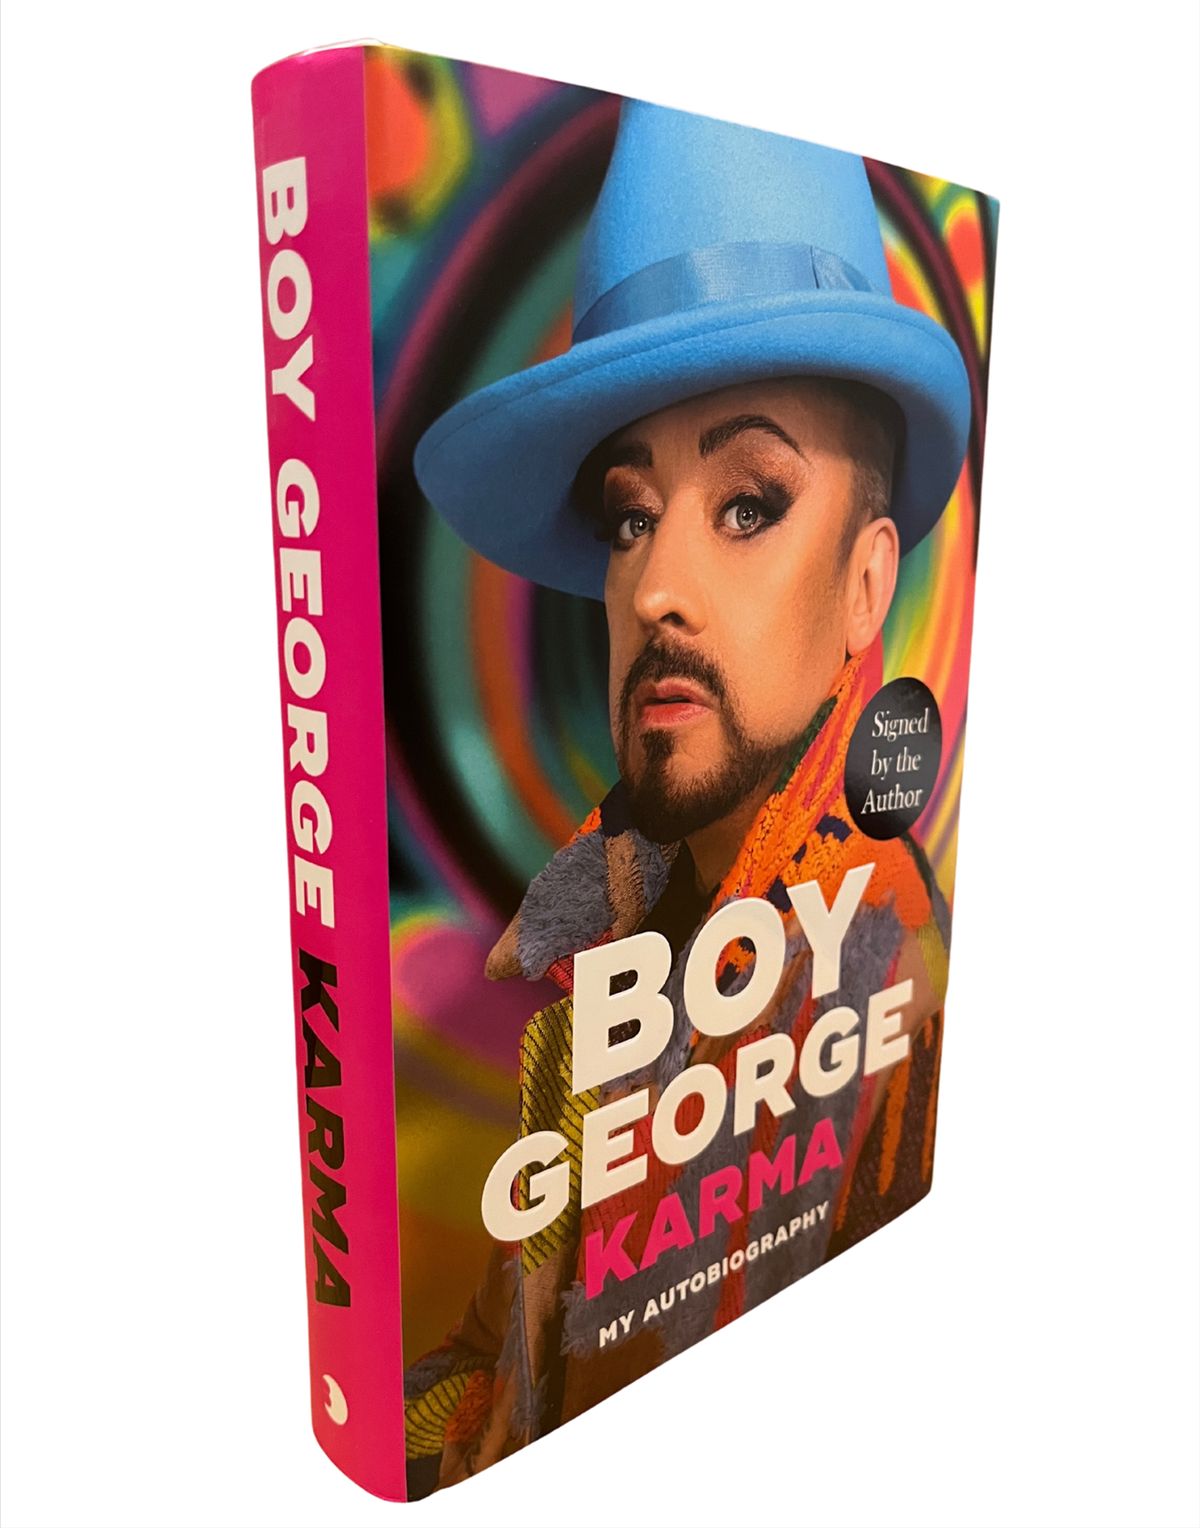 La biografia di Boy George, Karma